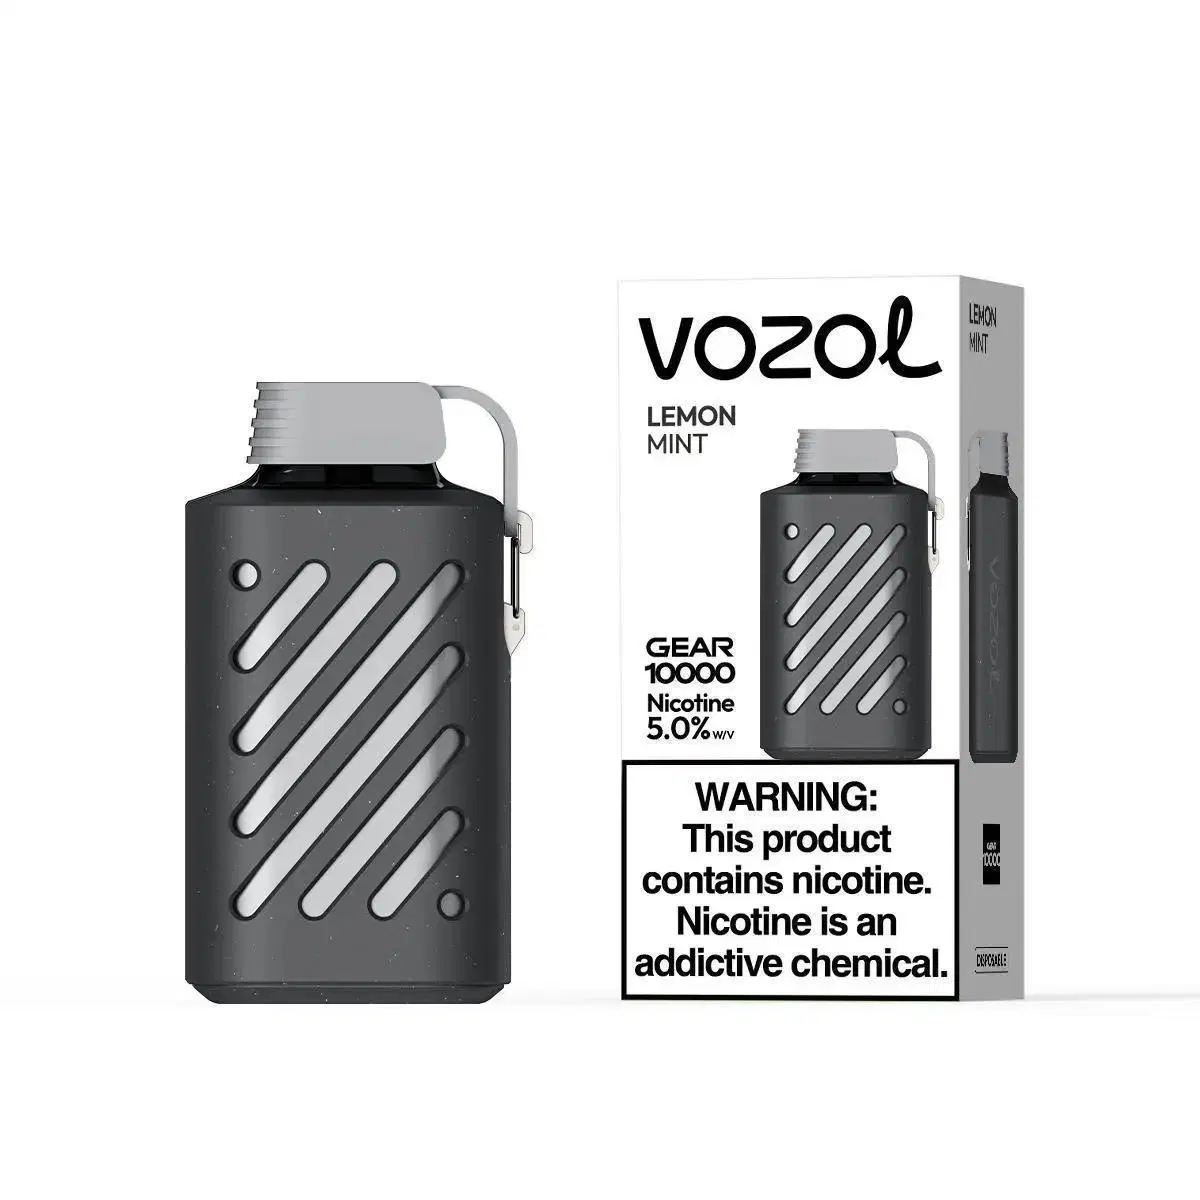 USA Popular Disposable Esighging aleeOriginal Vozol Gear 5000 7000 10000 نفخة